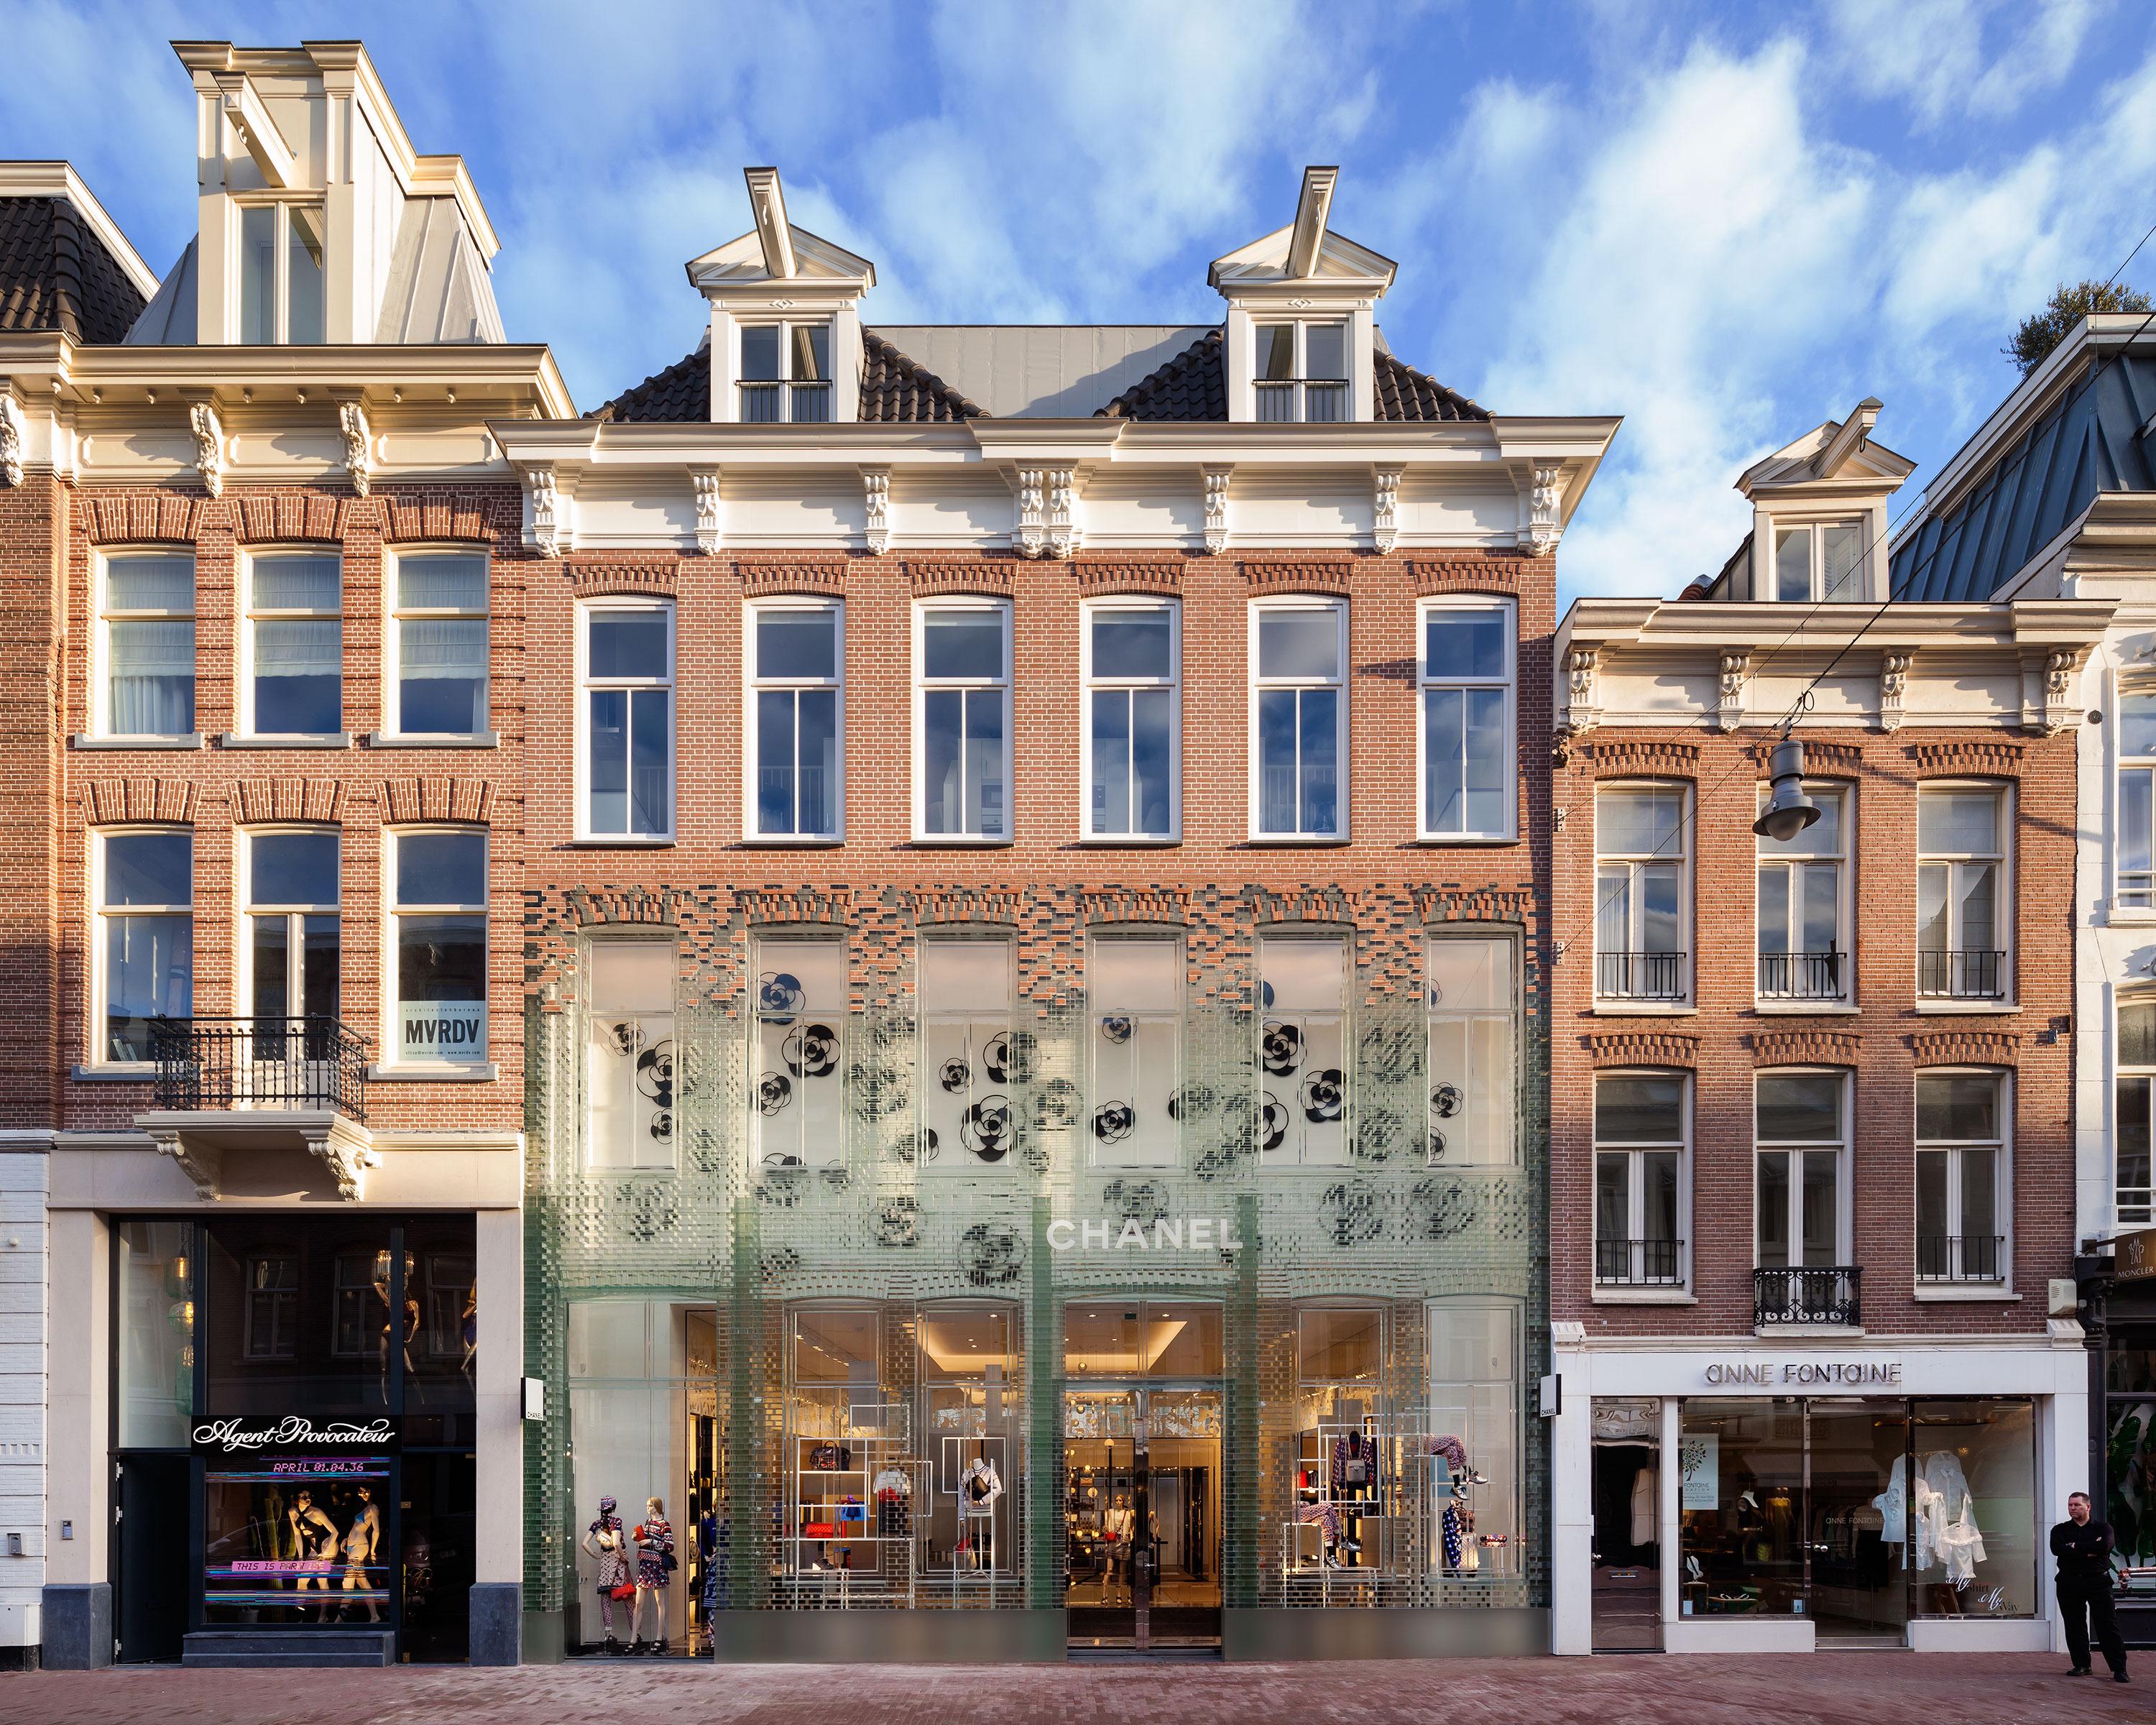 Mvrdv. Crystal Houses бюро MVRDV В Амстердаме. Архитектурные бюро MVRDV (Нидерланды). Бутик Шанель в Амстердаме. MVRDV В Амстердаме, Нидерланды.